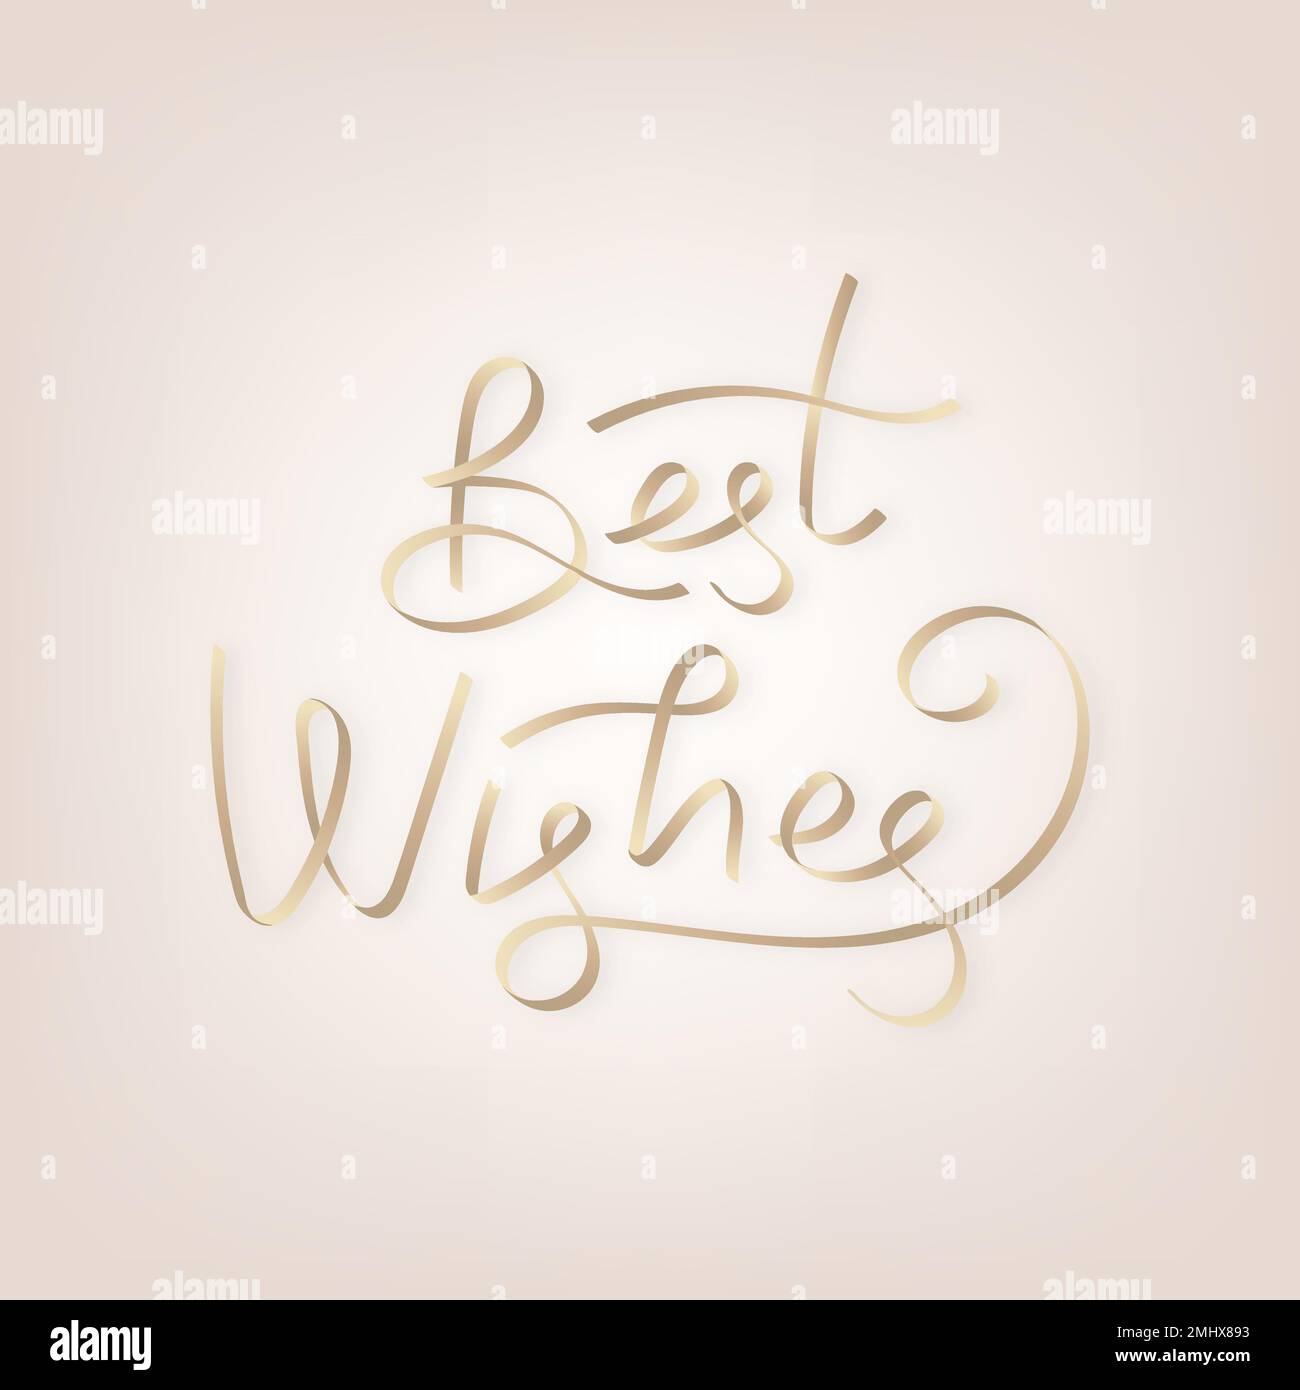 Golden Best Wishes Typography Vector Stock Vector Image And Art Alamy